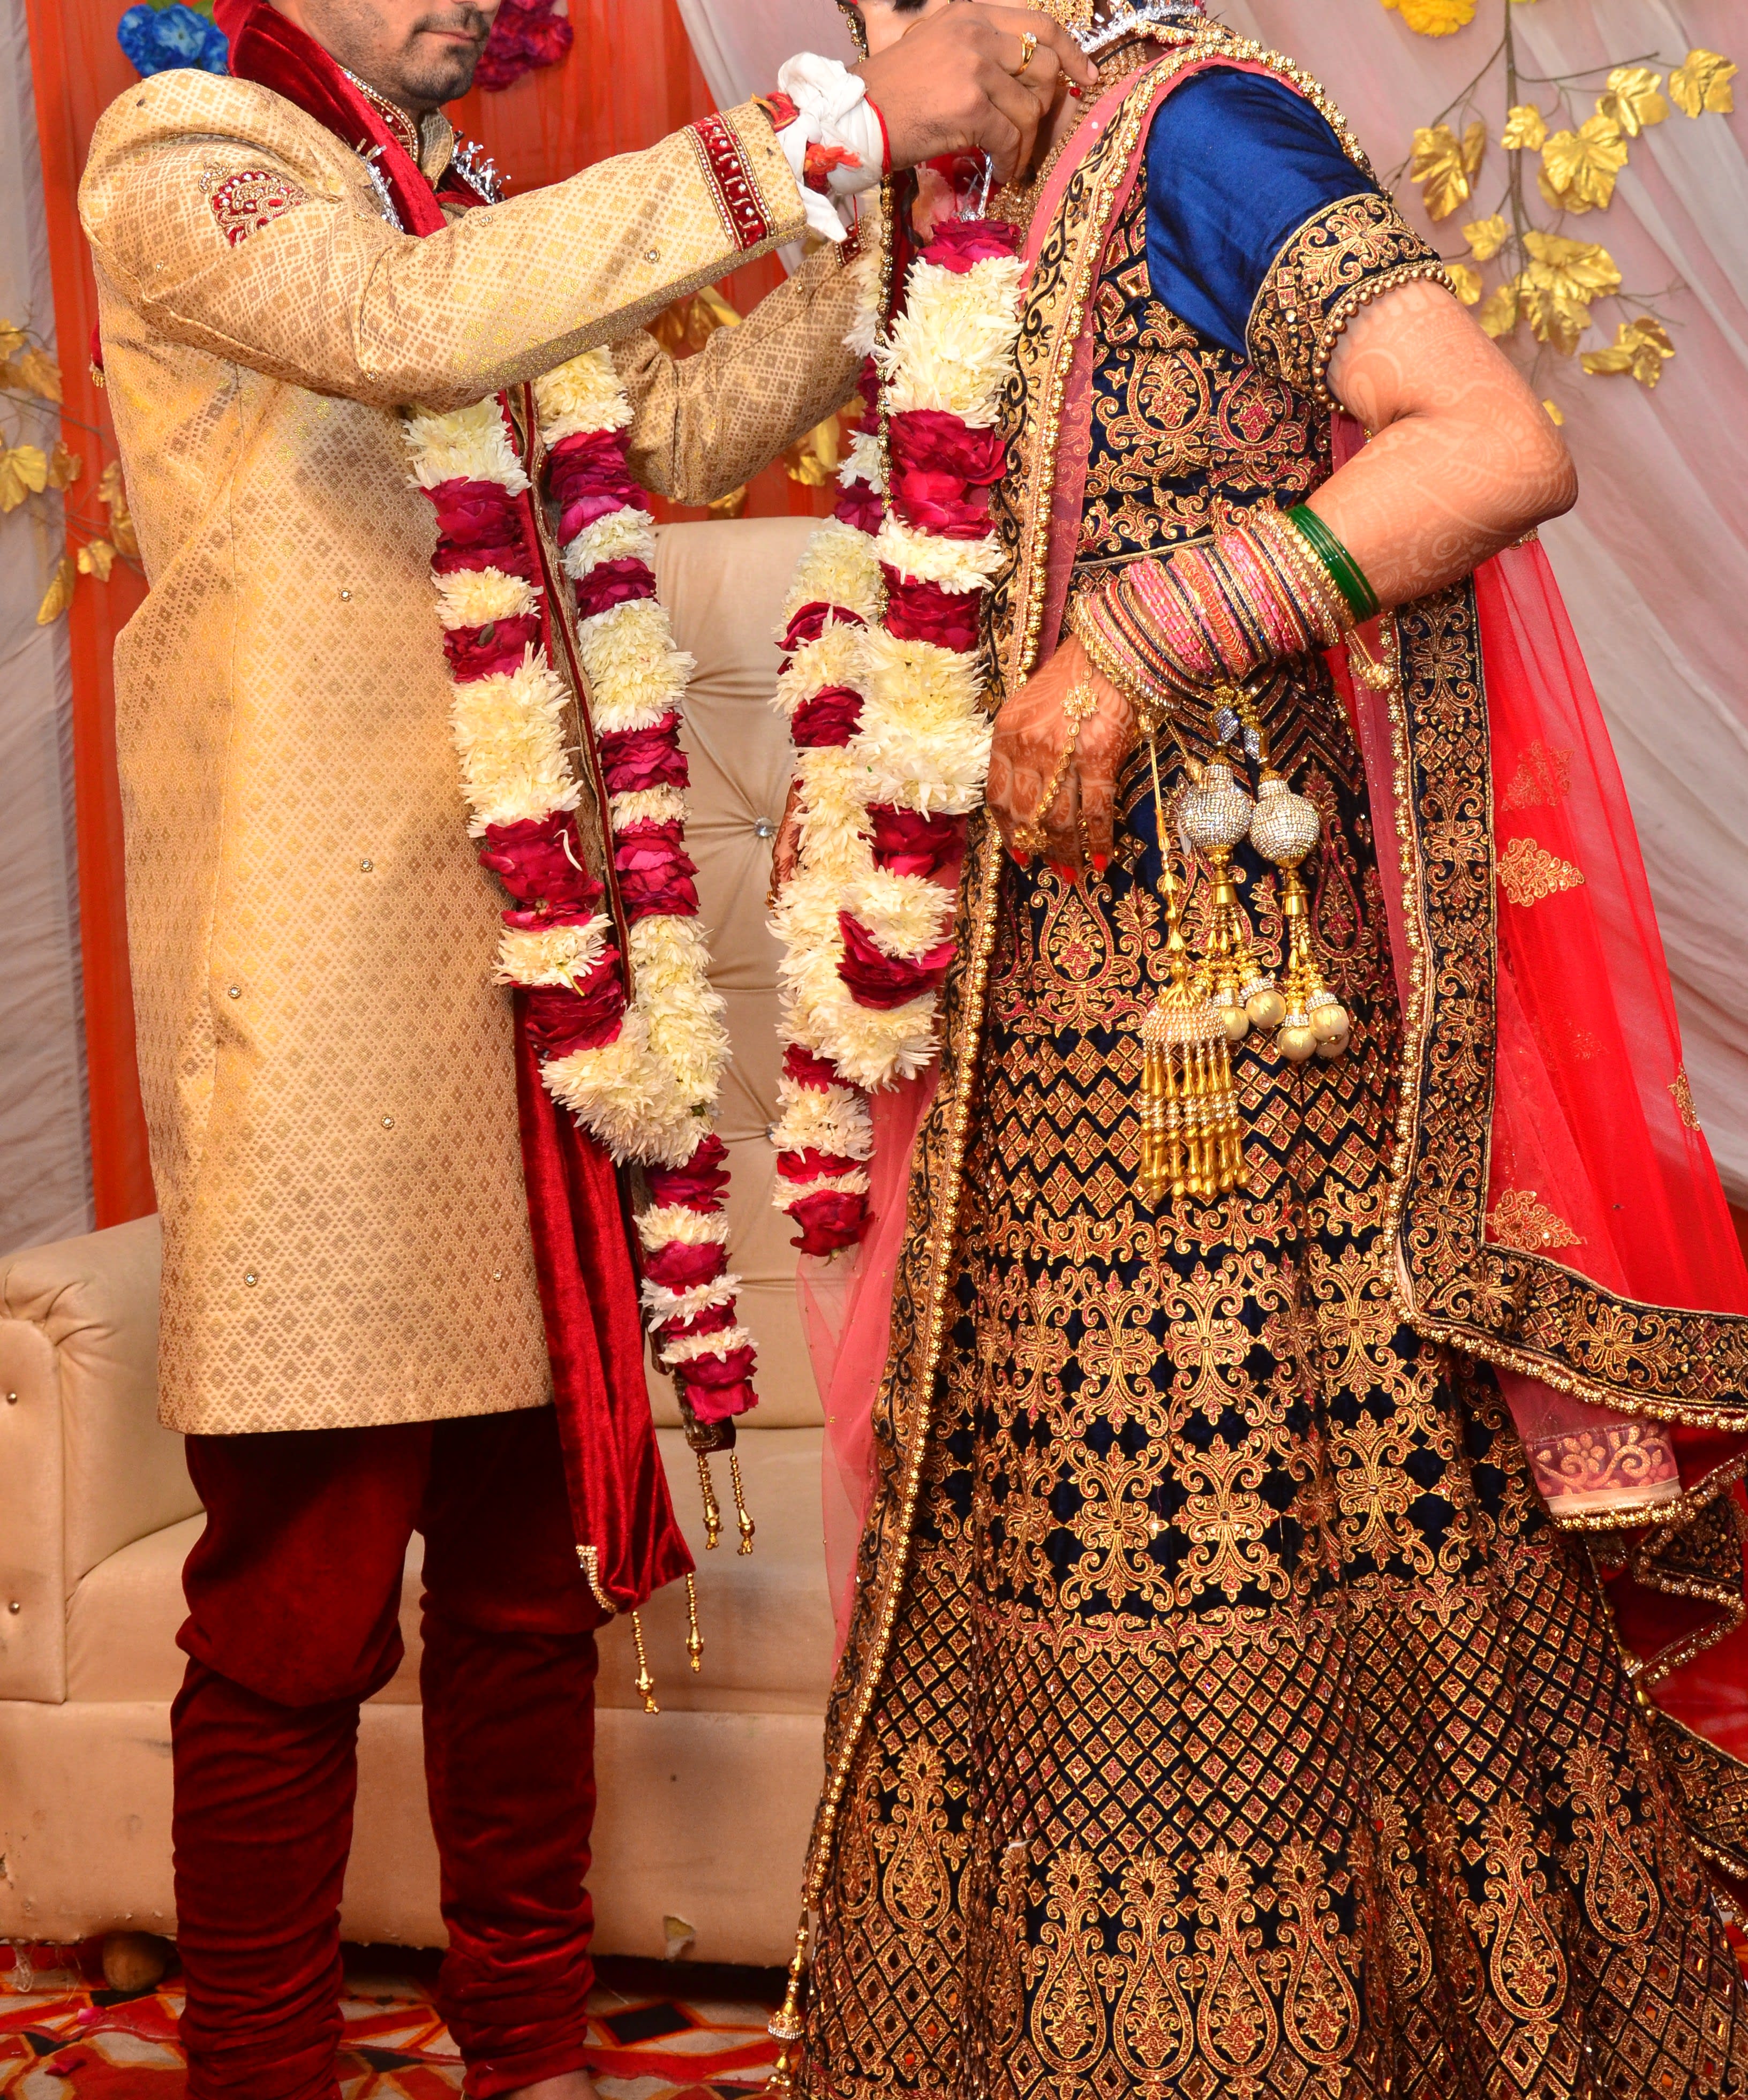 35+ Gorgeous Varmala Design Ideas For Indian Weddings | Indian wedding,  Indian wedding garland, Indian bridal